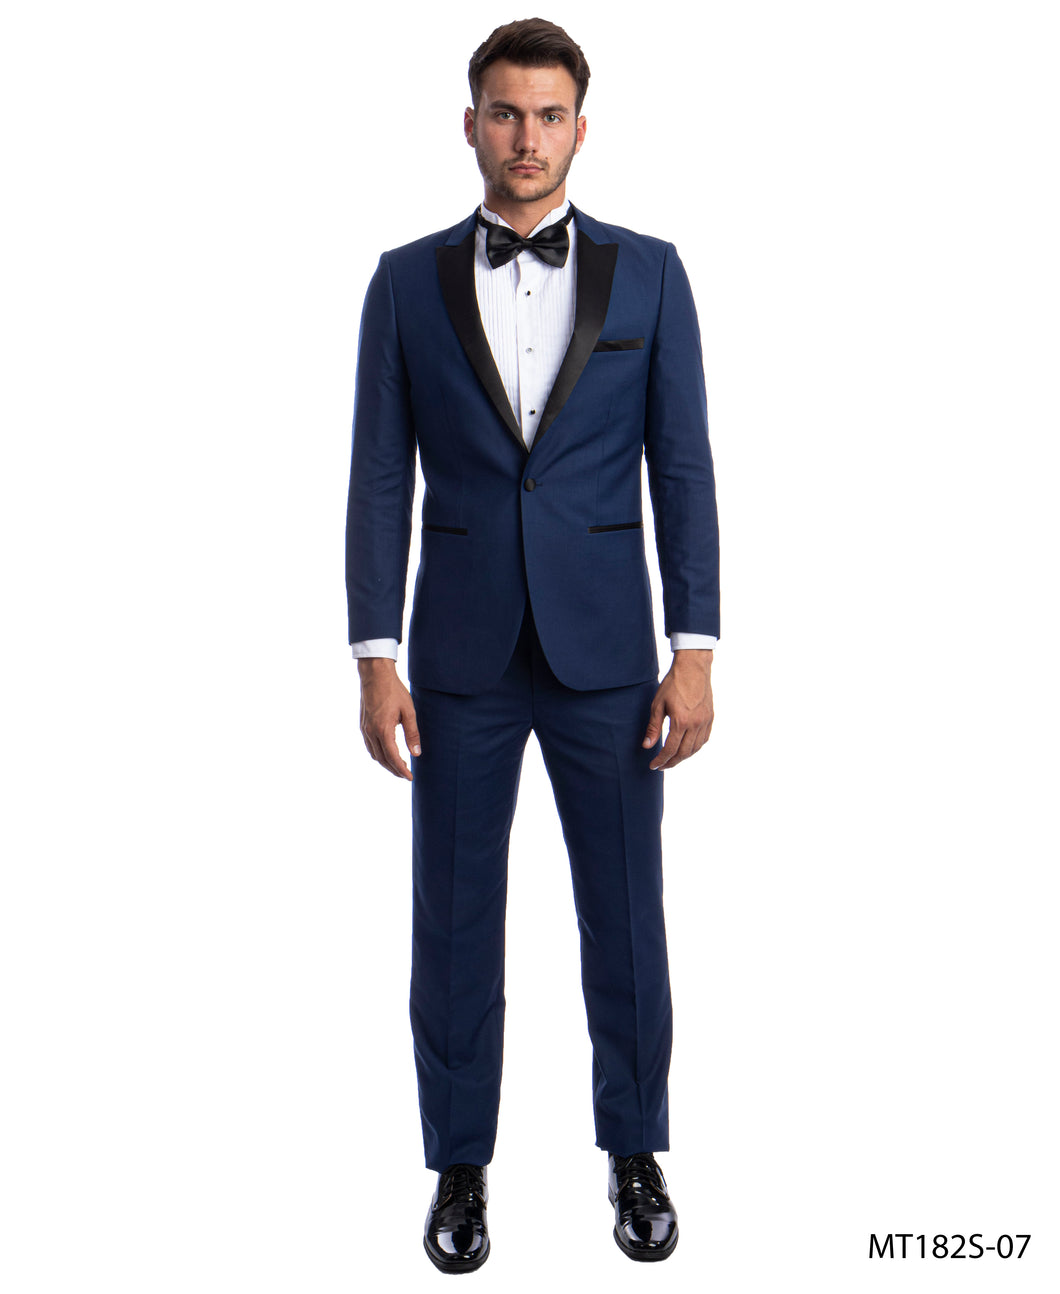 Cobalt/Black Tuxedo Suit For Men Formal Tuxedos For All Ocassions MT182S-07